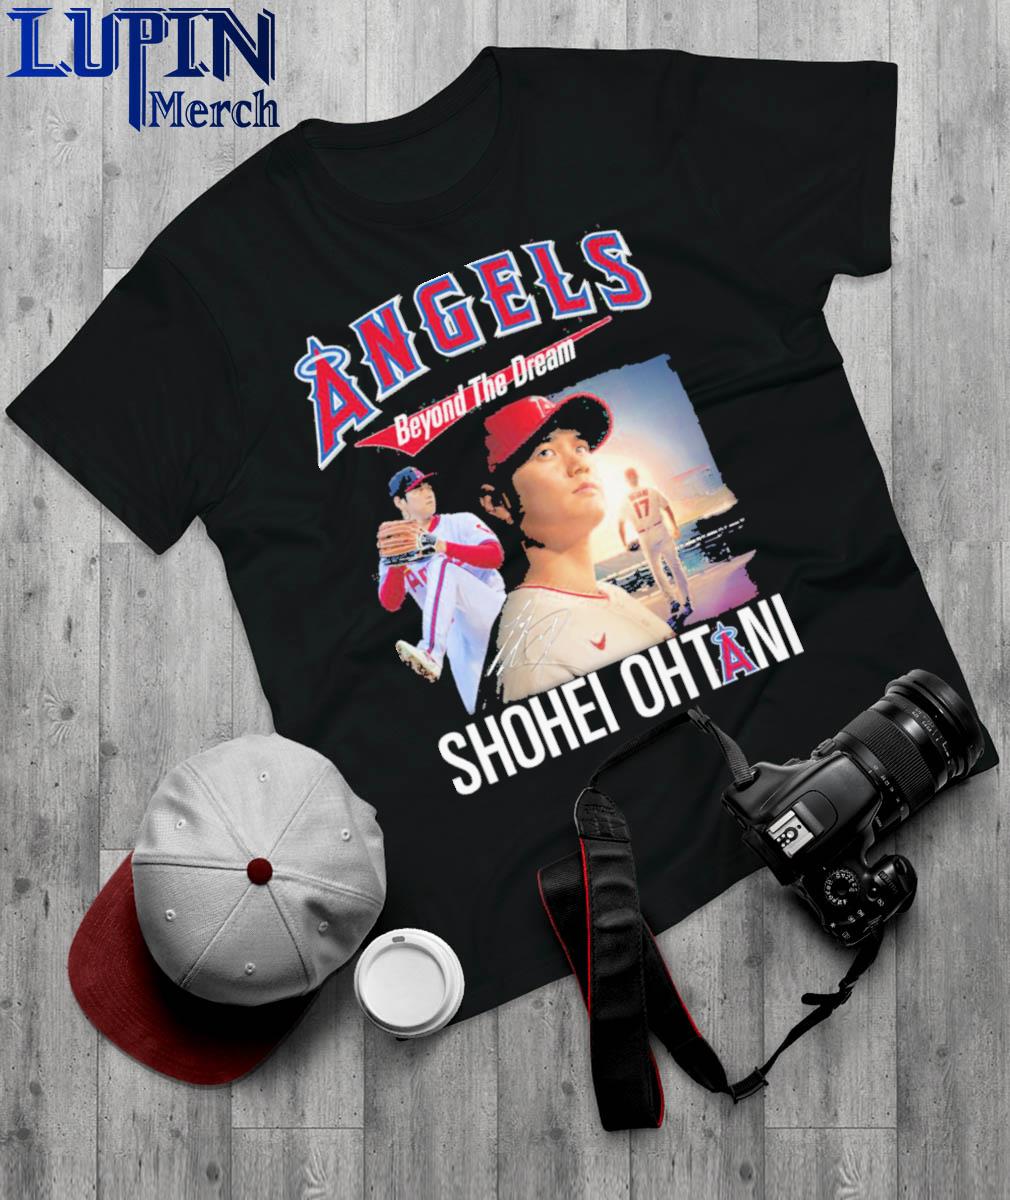 Official Shohei Ohtani LA Angels beyond the dream shirt